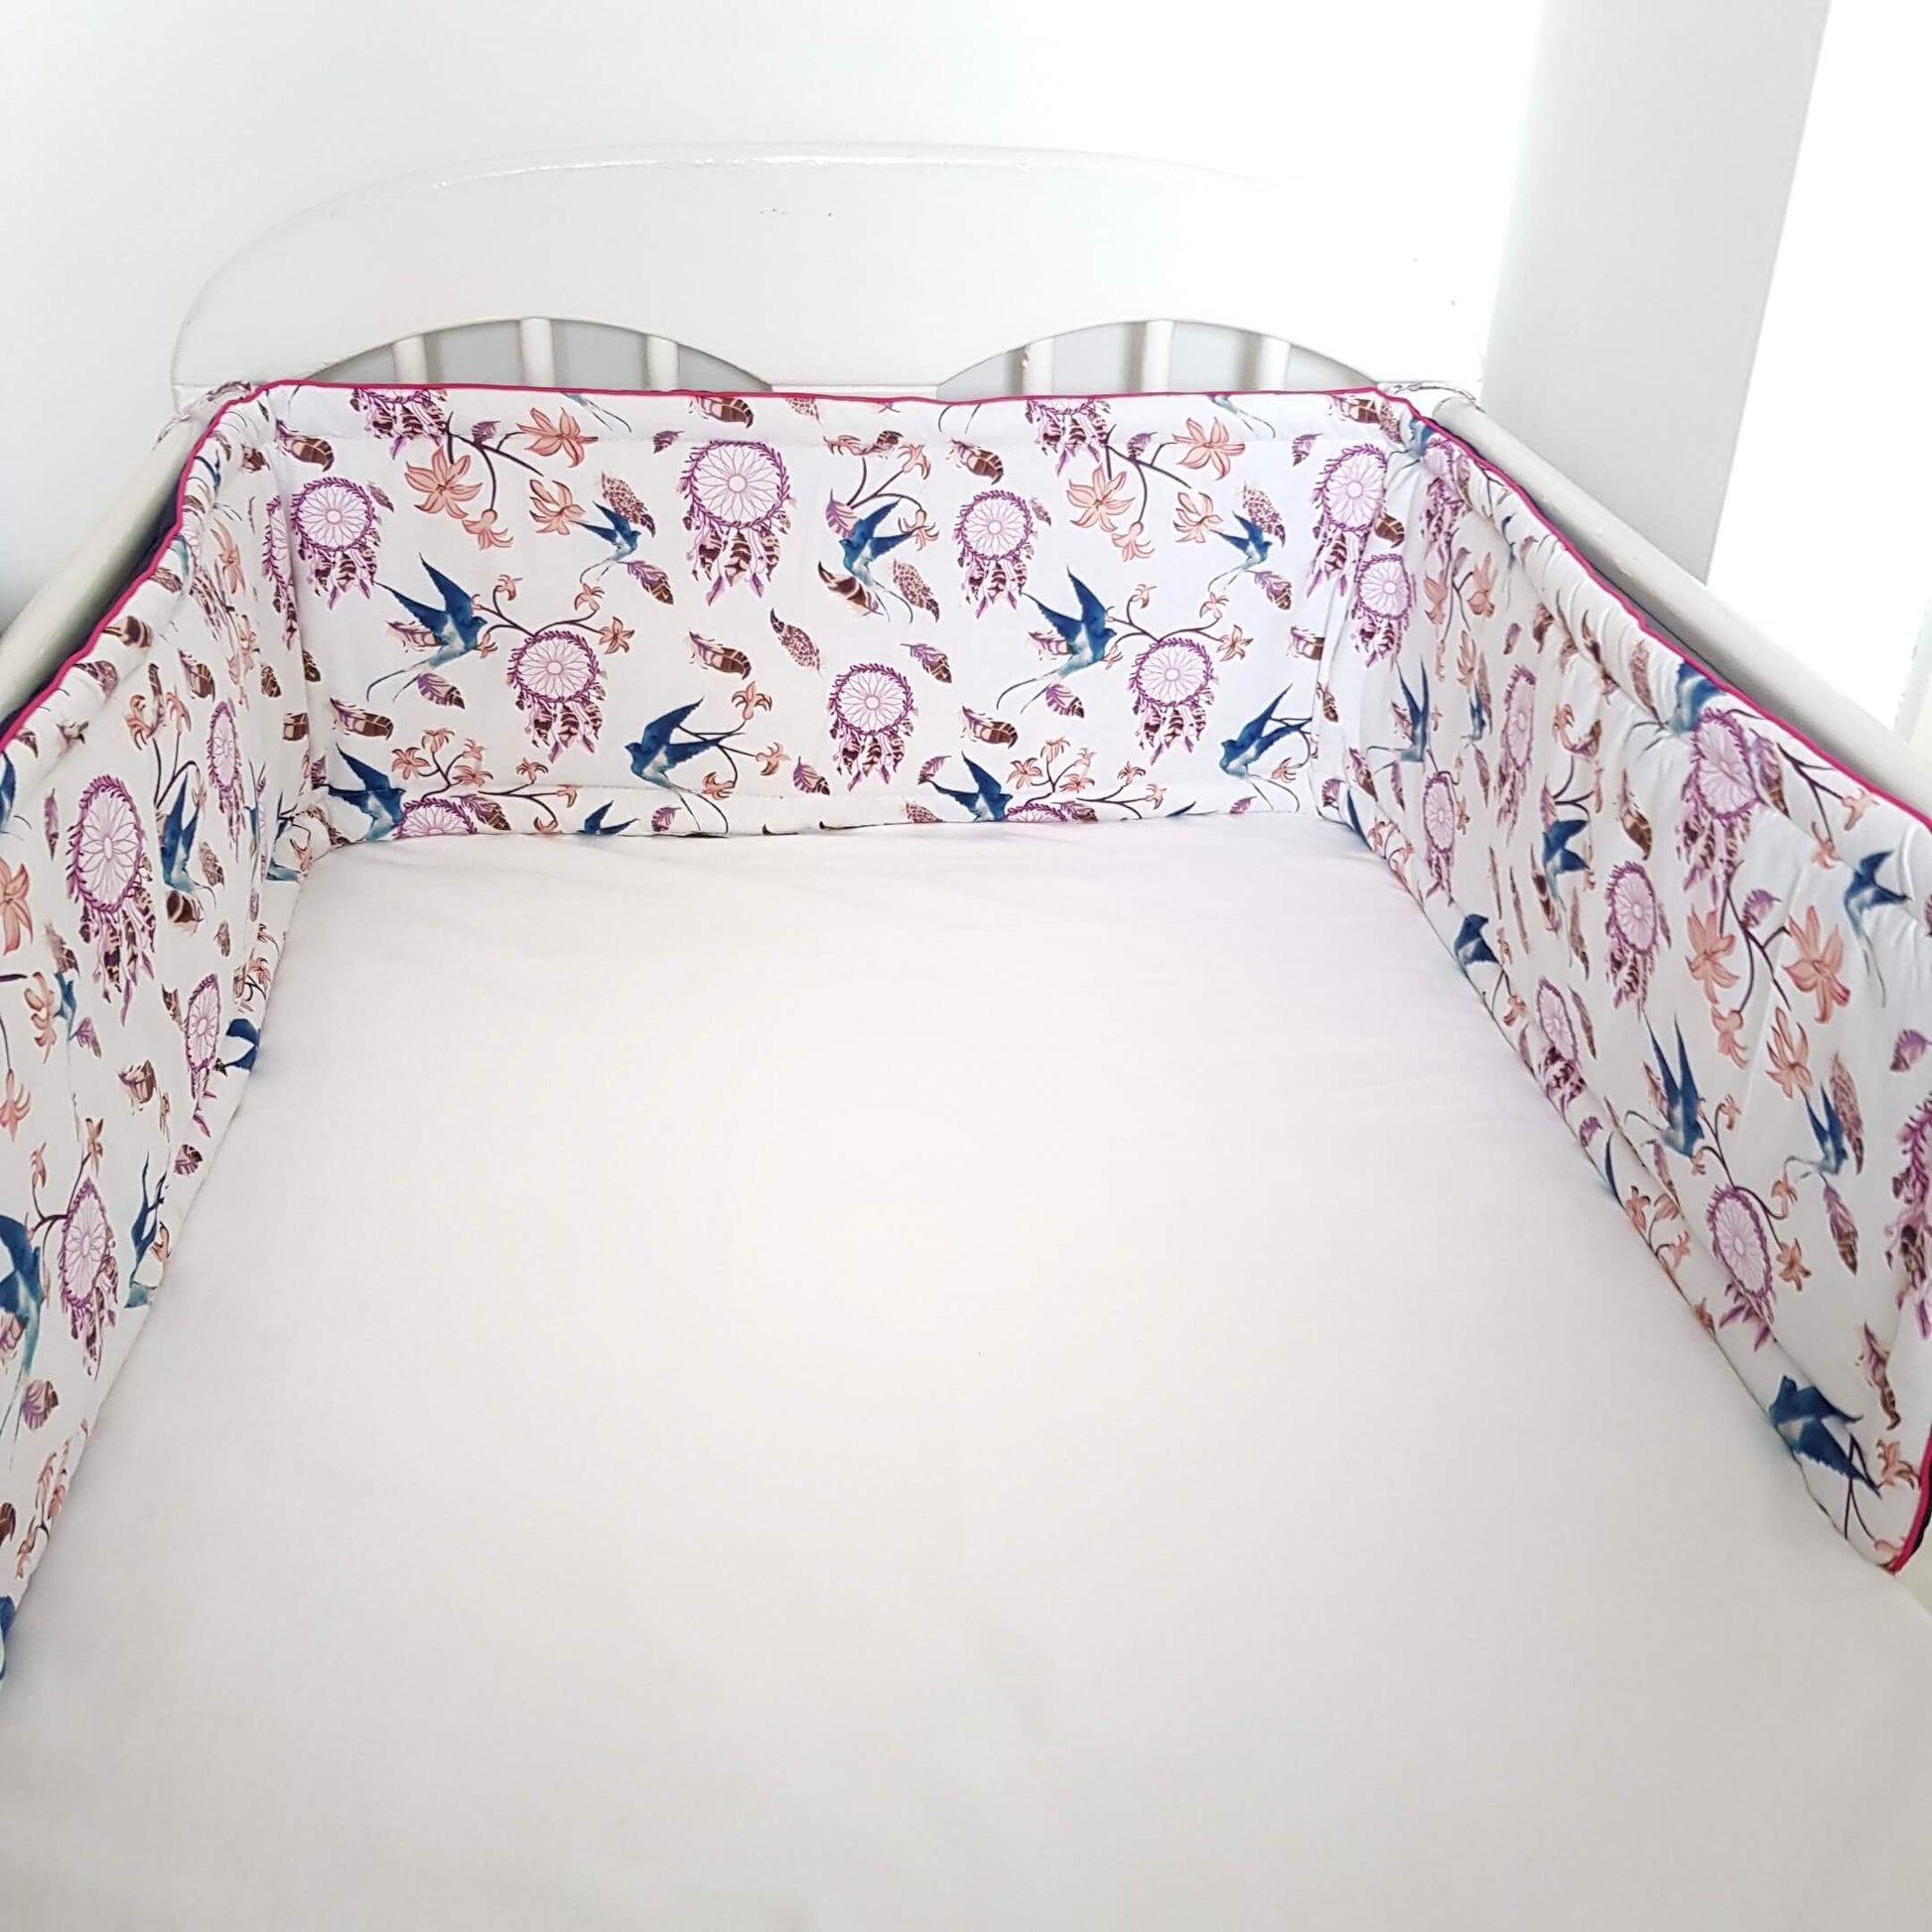 evcushy nursery cot bed bumper